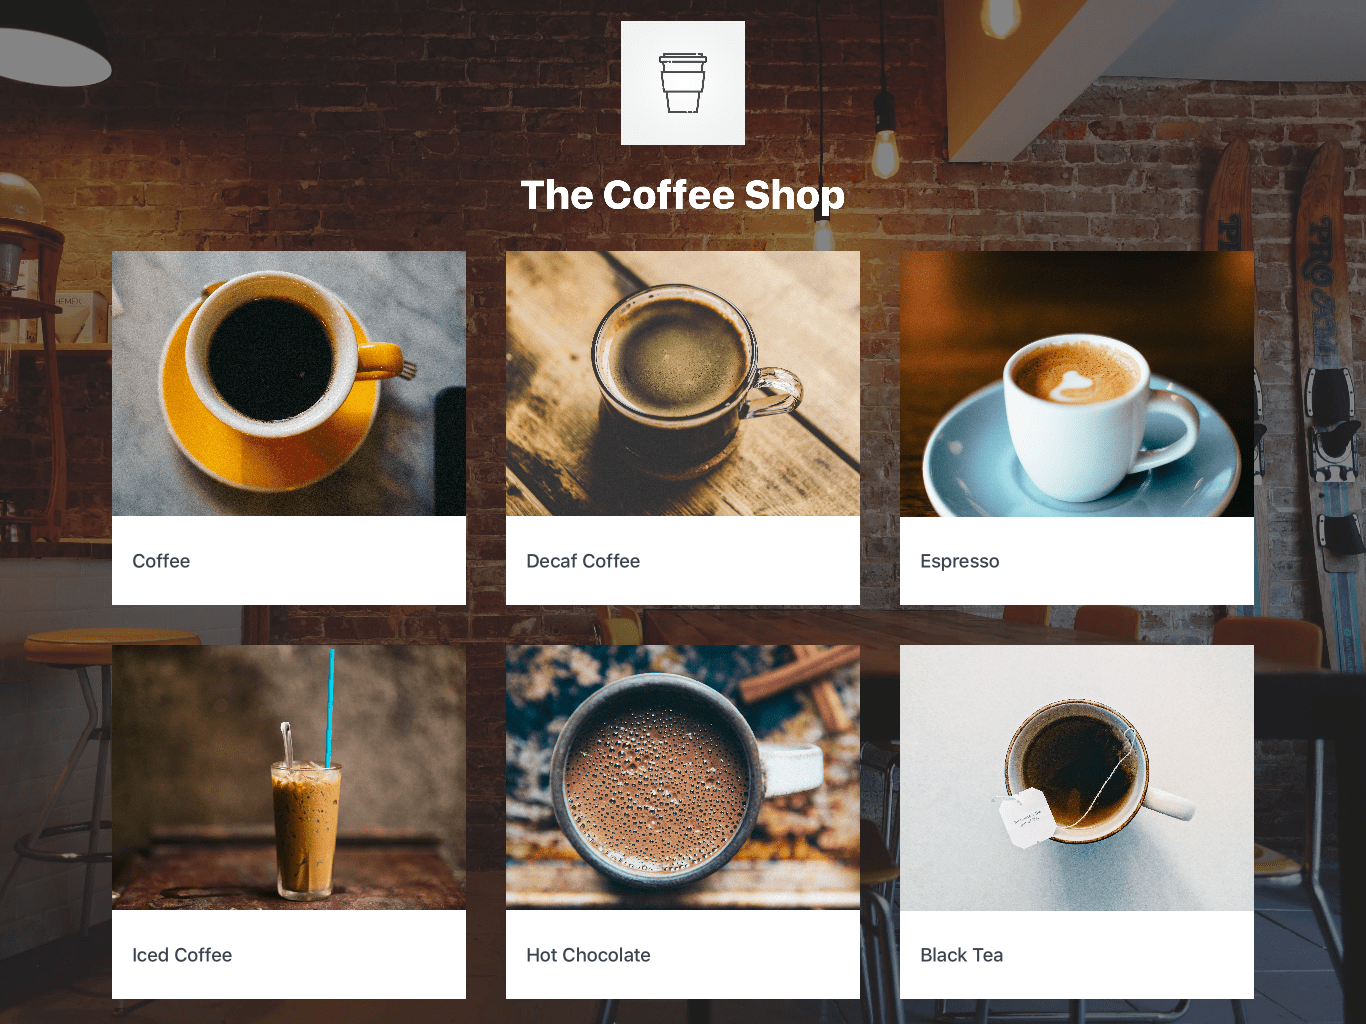 The Coffee Shop Kiosk